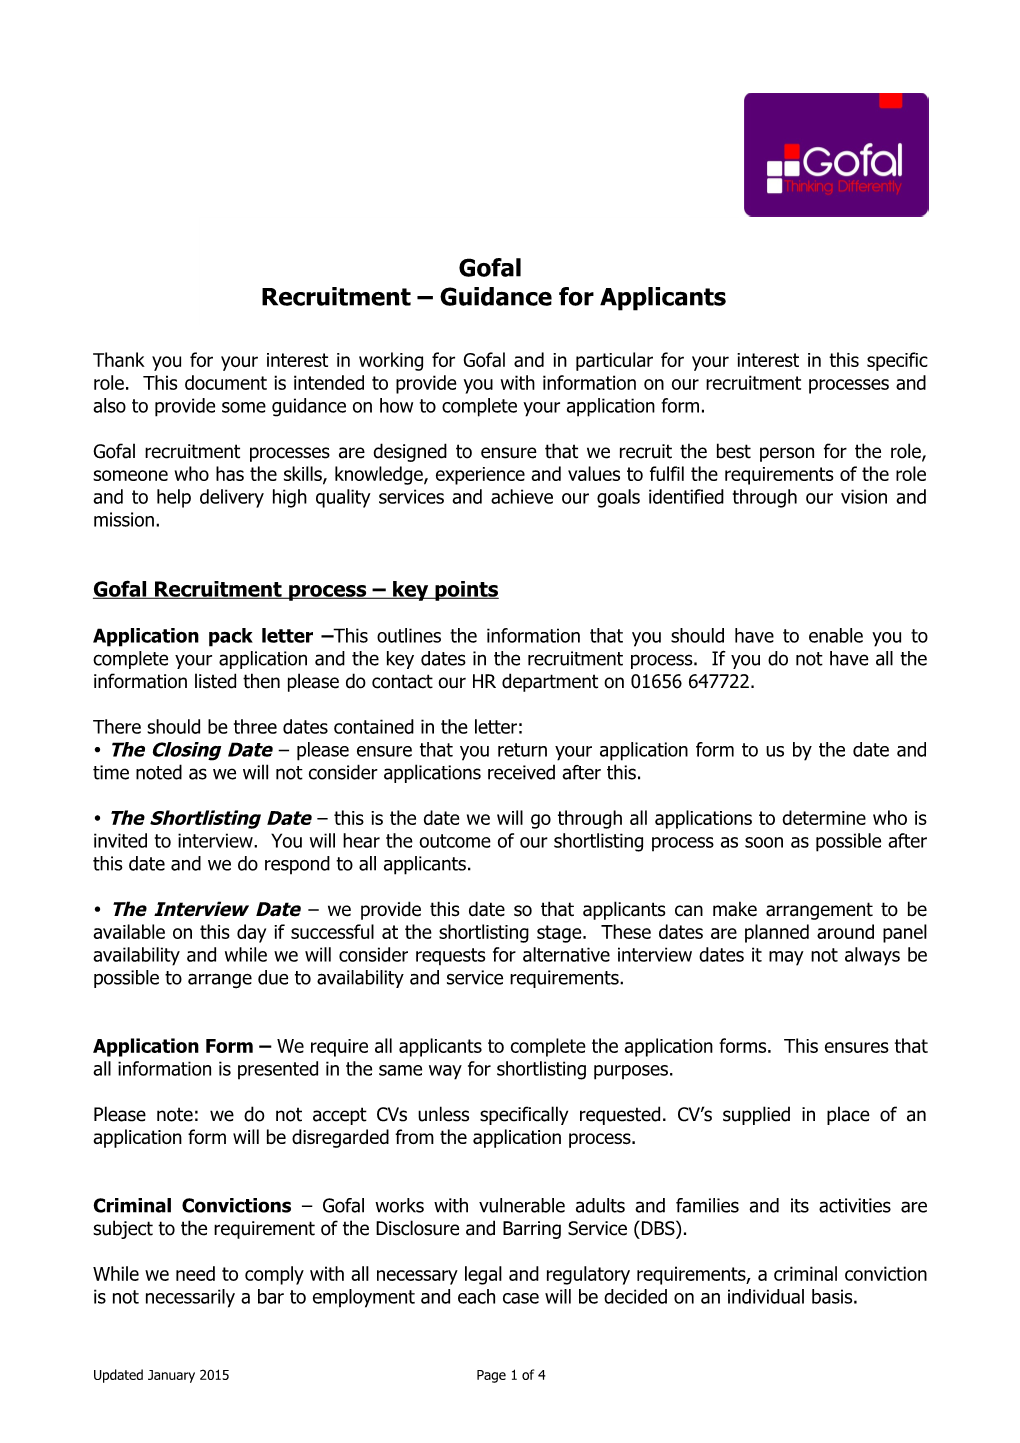 Gofal Recruitment Process Key Points